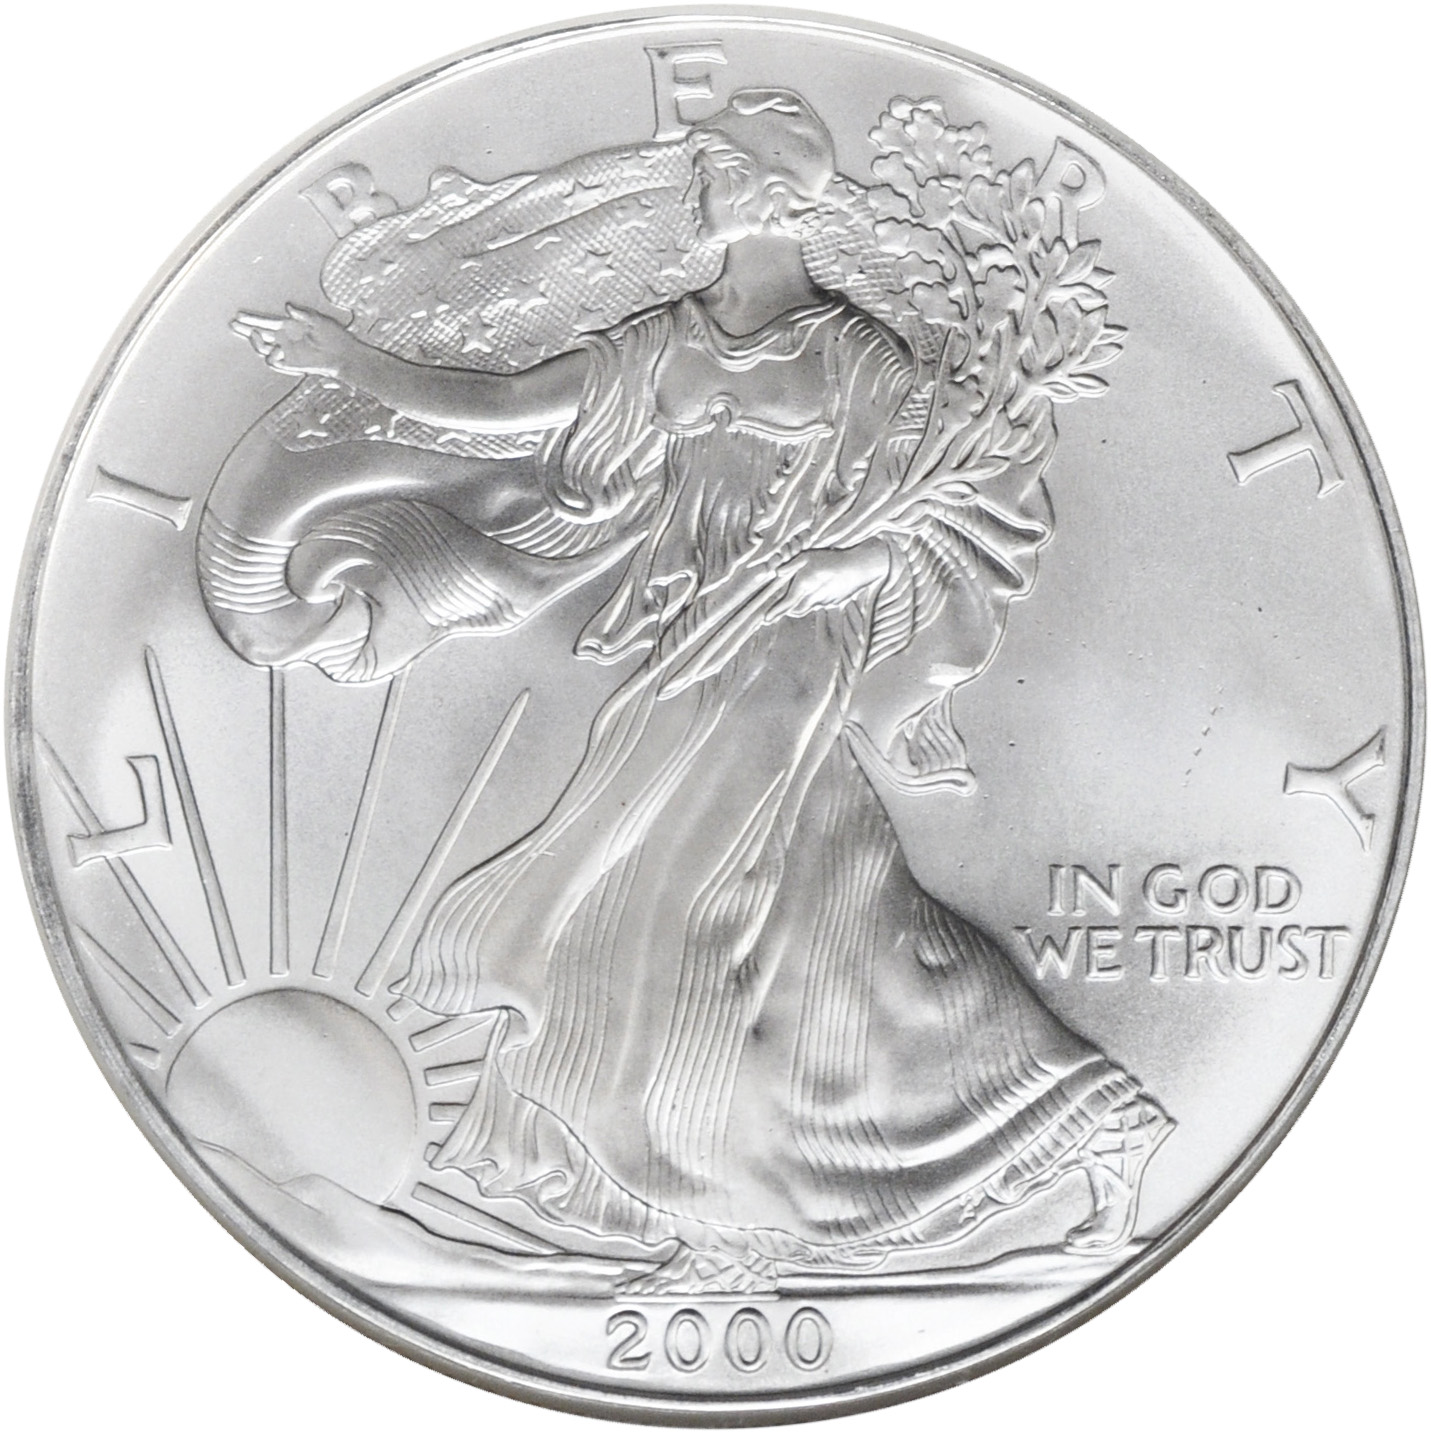 Value Of 2000 1 Silver Coin American Silver Eagle Coin